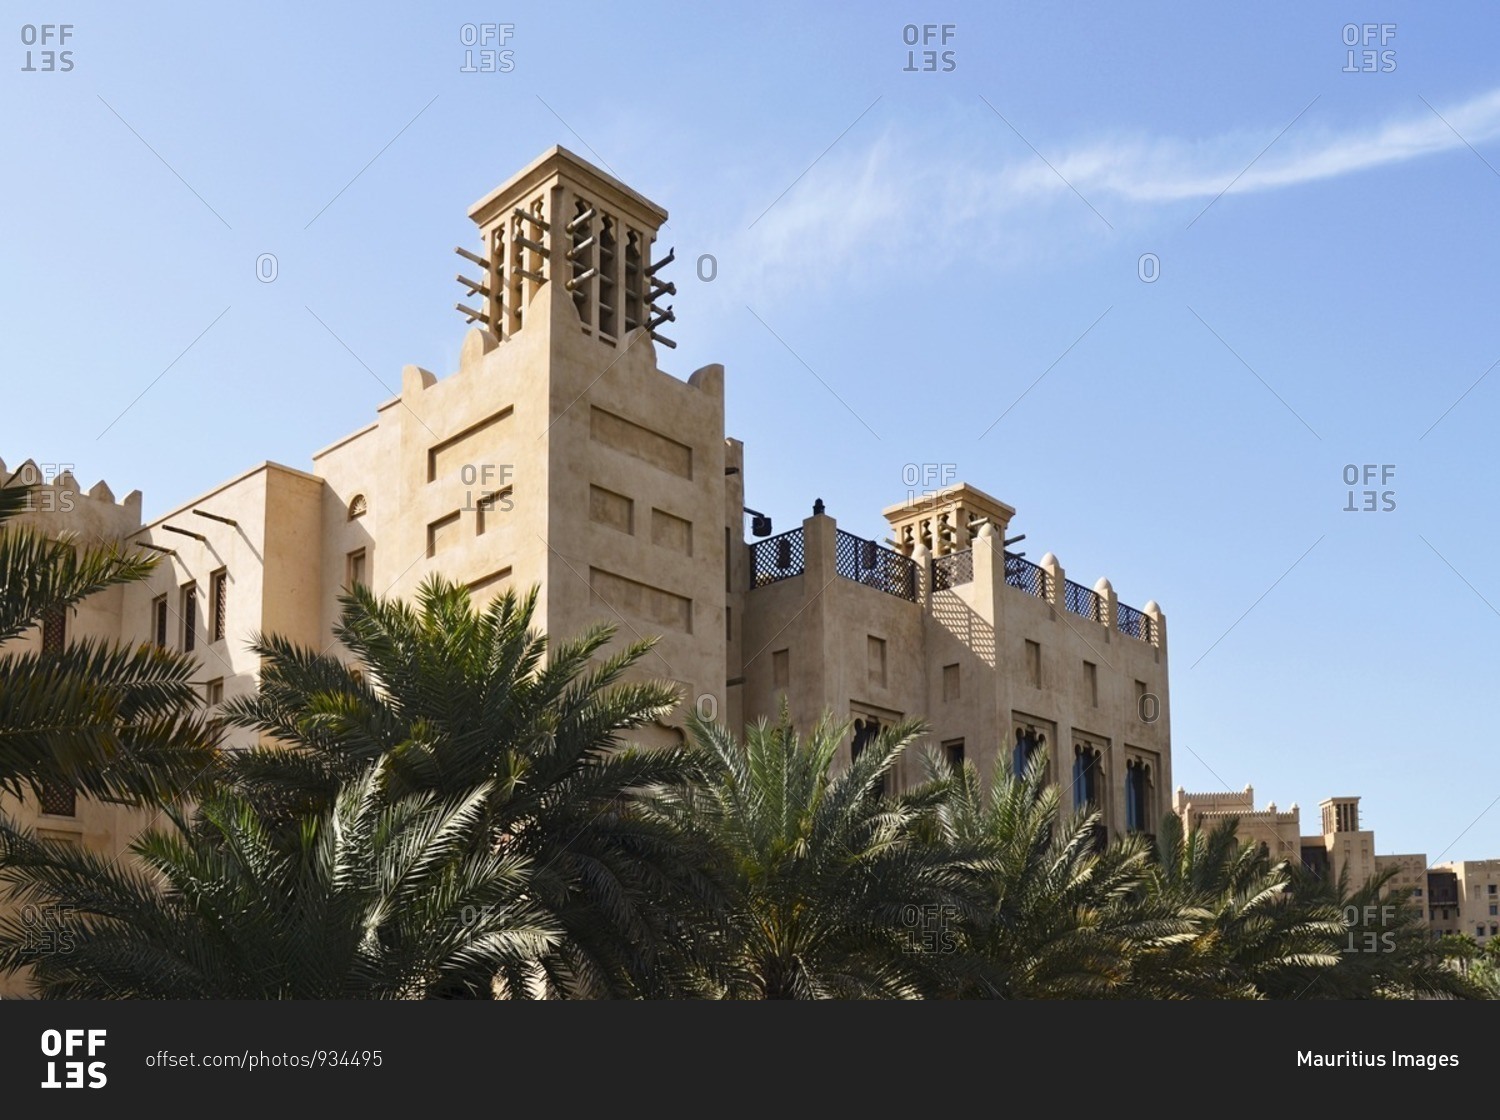 Architecture, wind towers, historical, Souk Madinat, Jumeirah, Emirate of Dubai, United Arab Emirates, Arabian Peninsula, Middle East